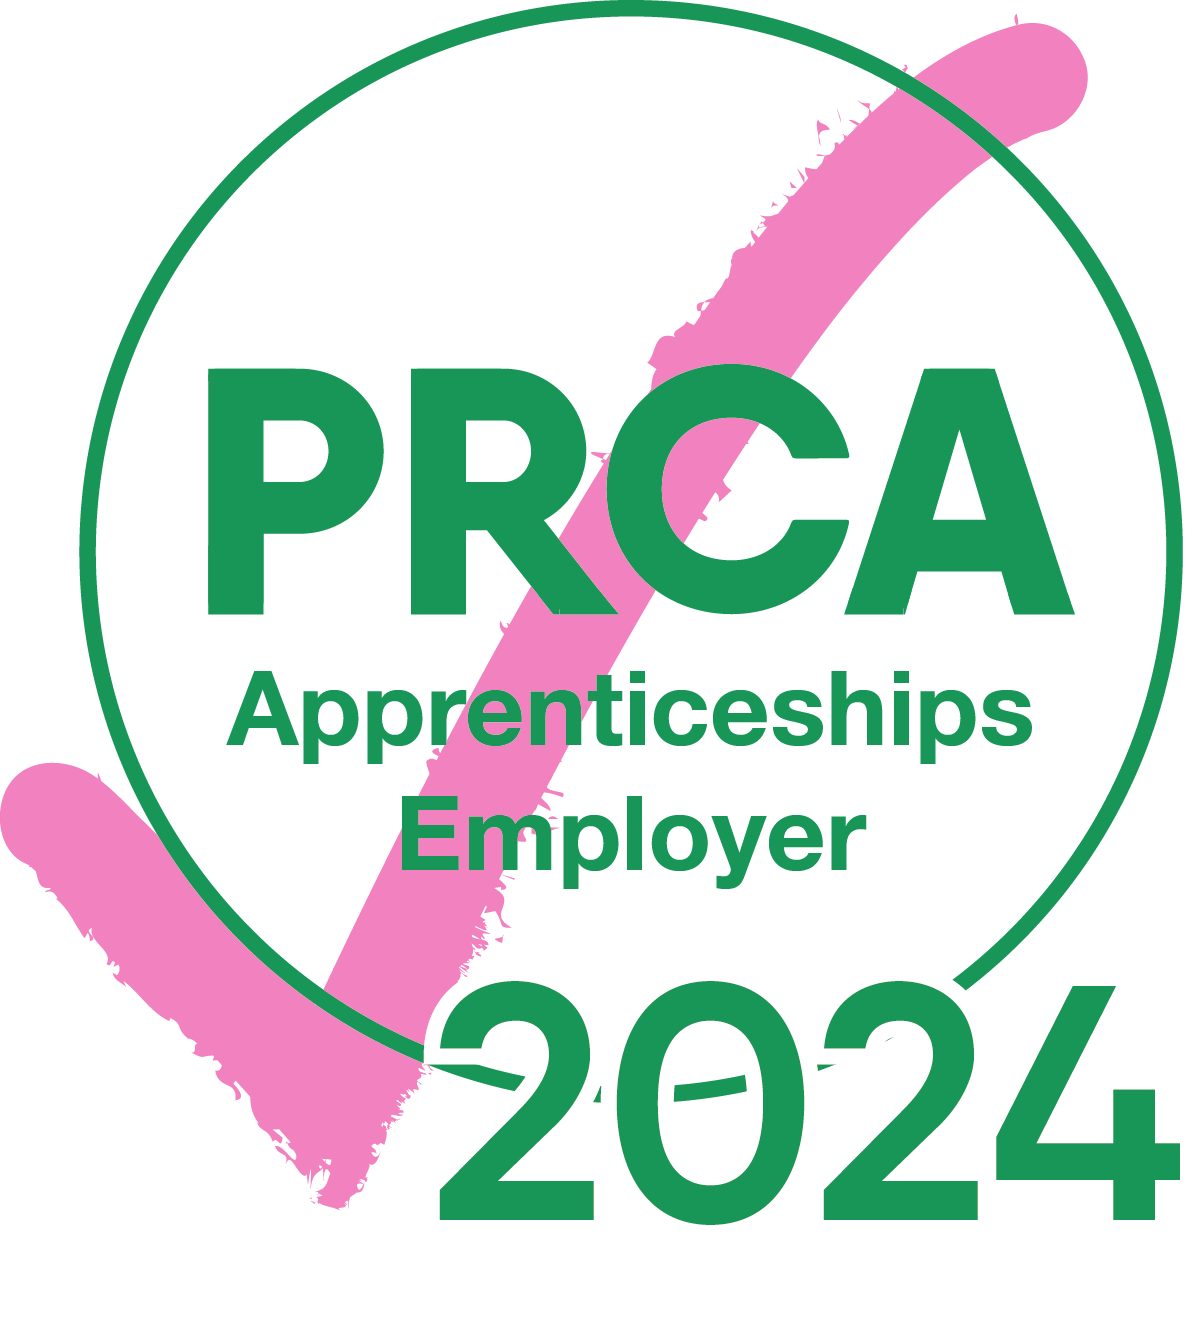 PRCA apprenticeship employer badge 2024